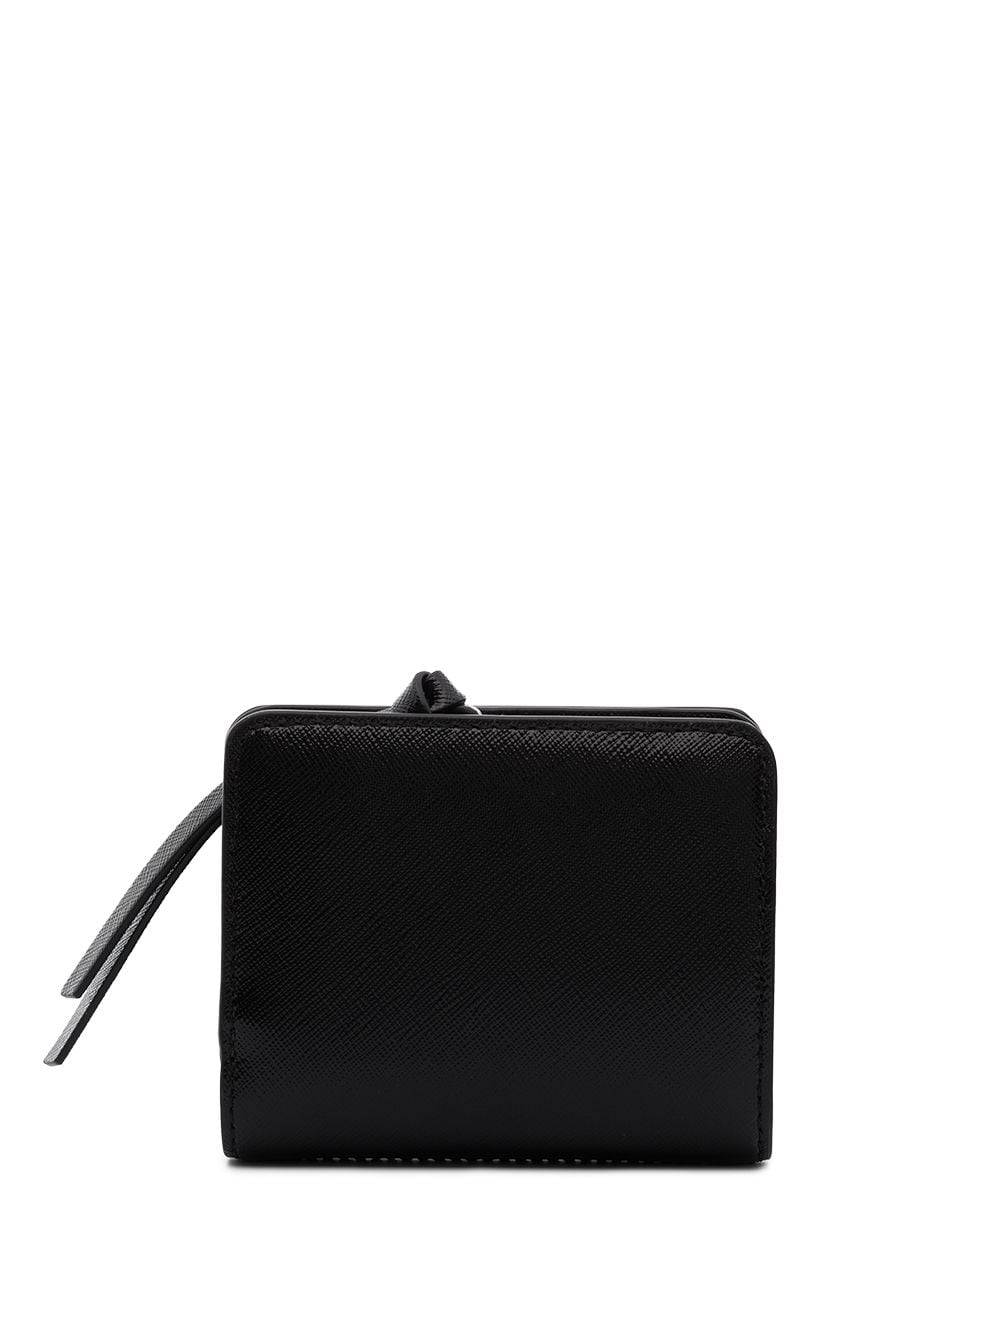 PTD Slim Wallet / Compact Card Holder – By EmJ